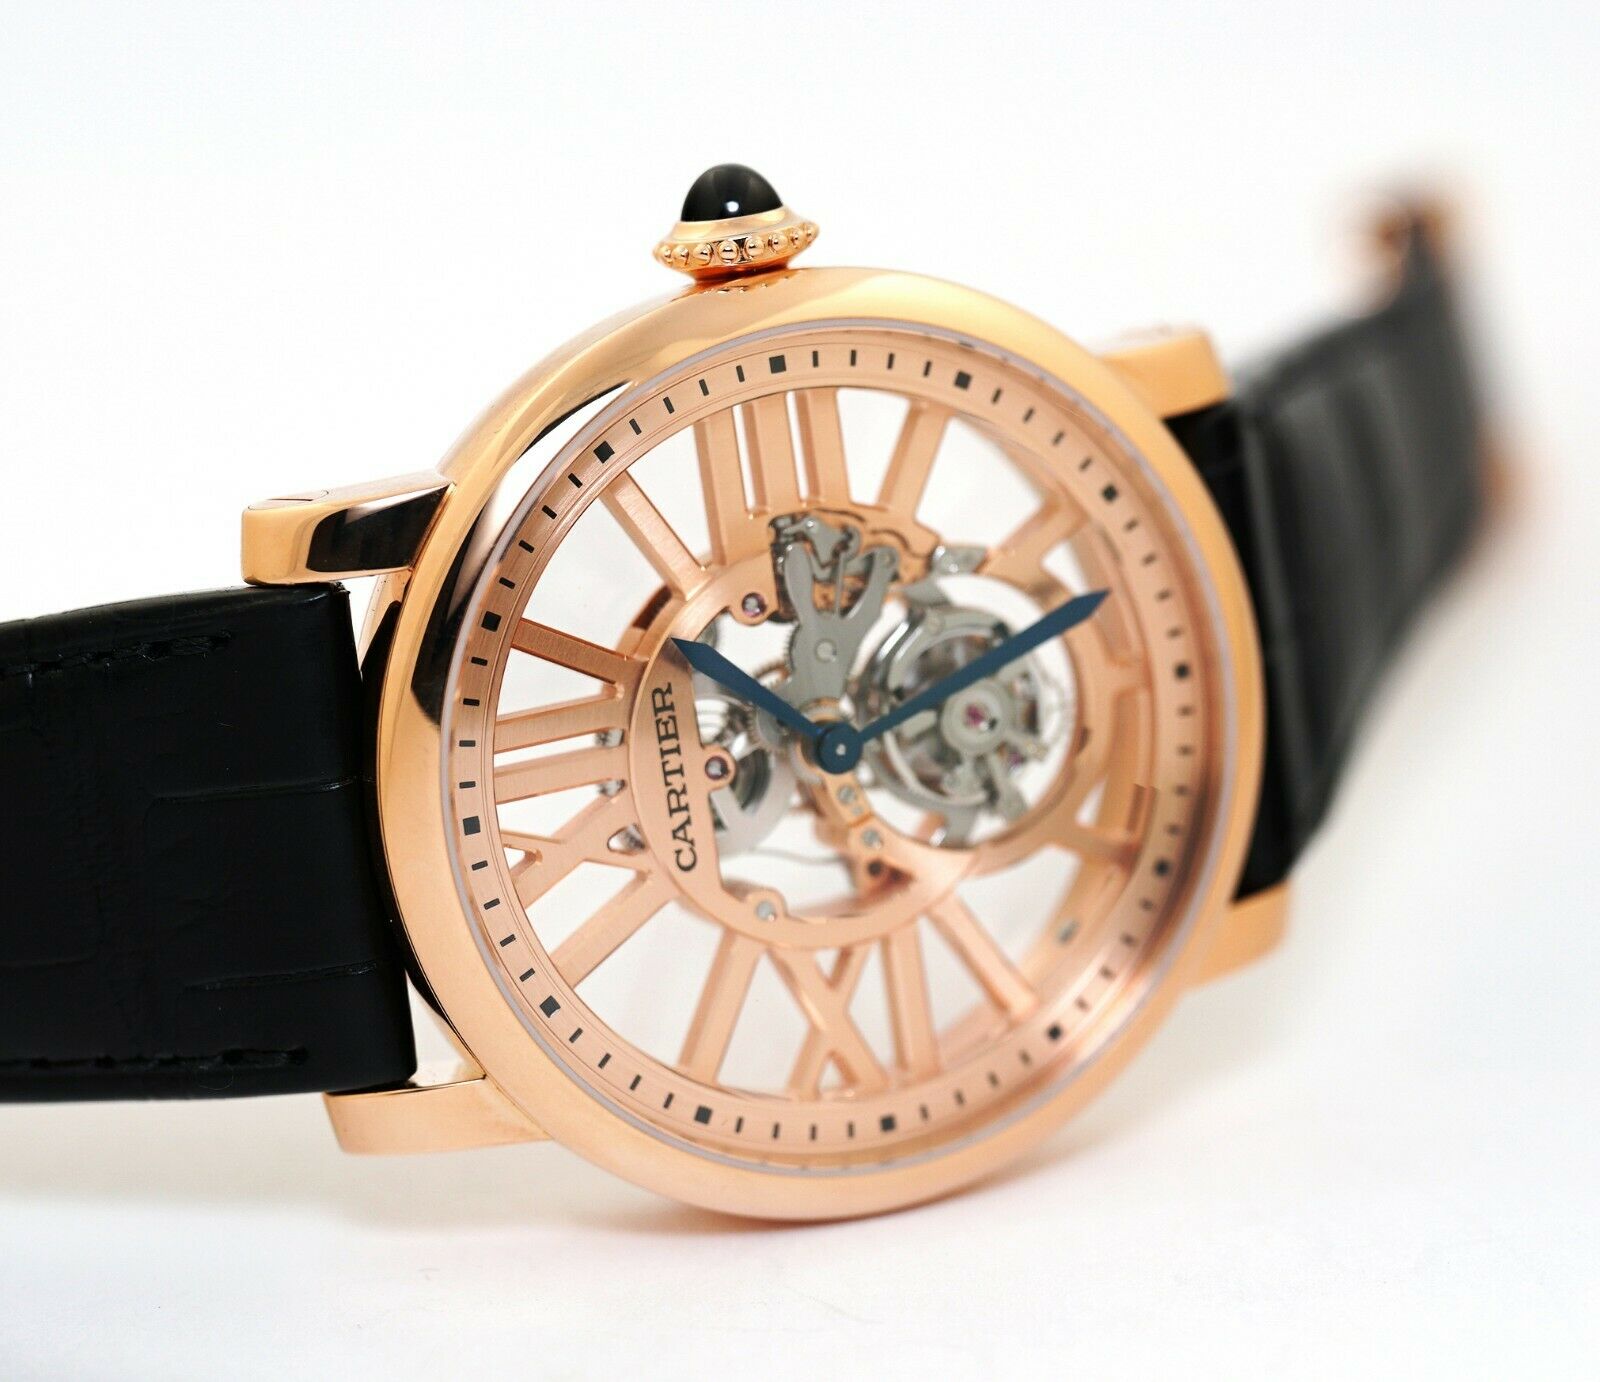 Buy Cartier Rotonde de Cartier Skeleton Flying Watch - W1580046